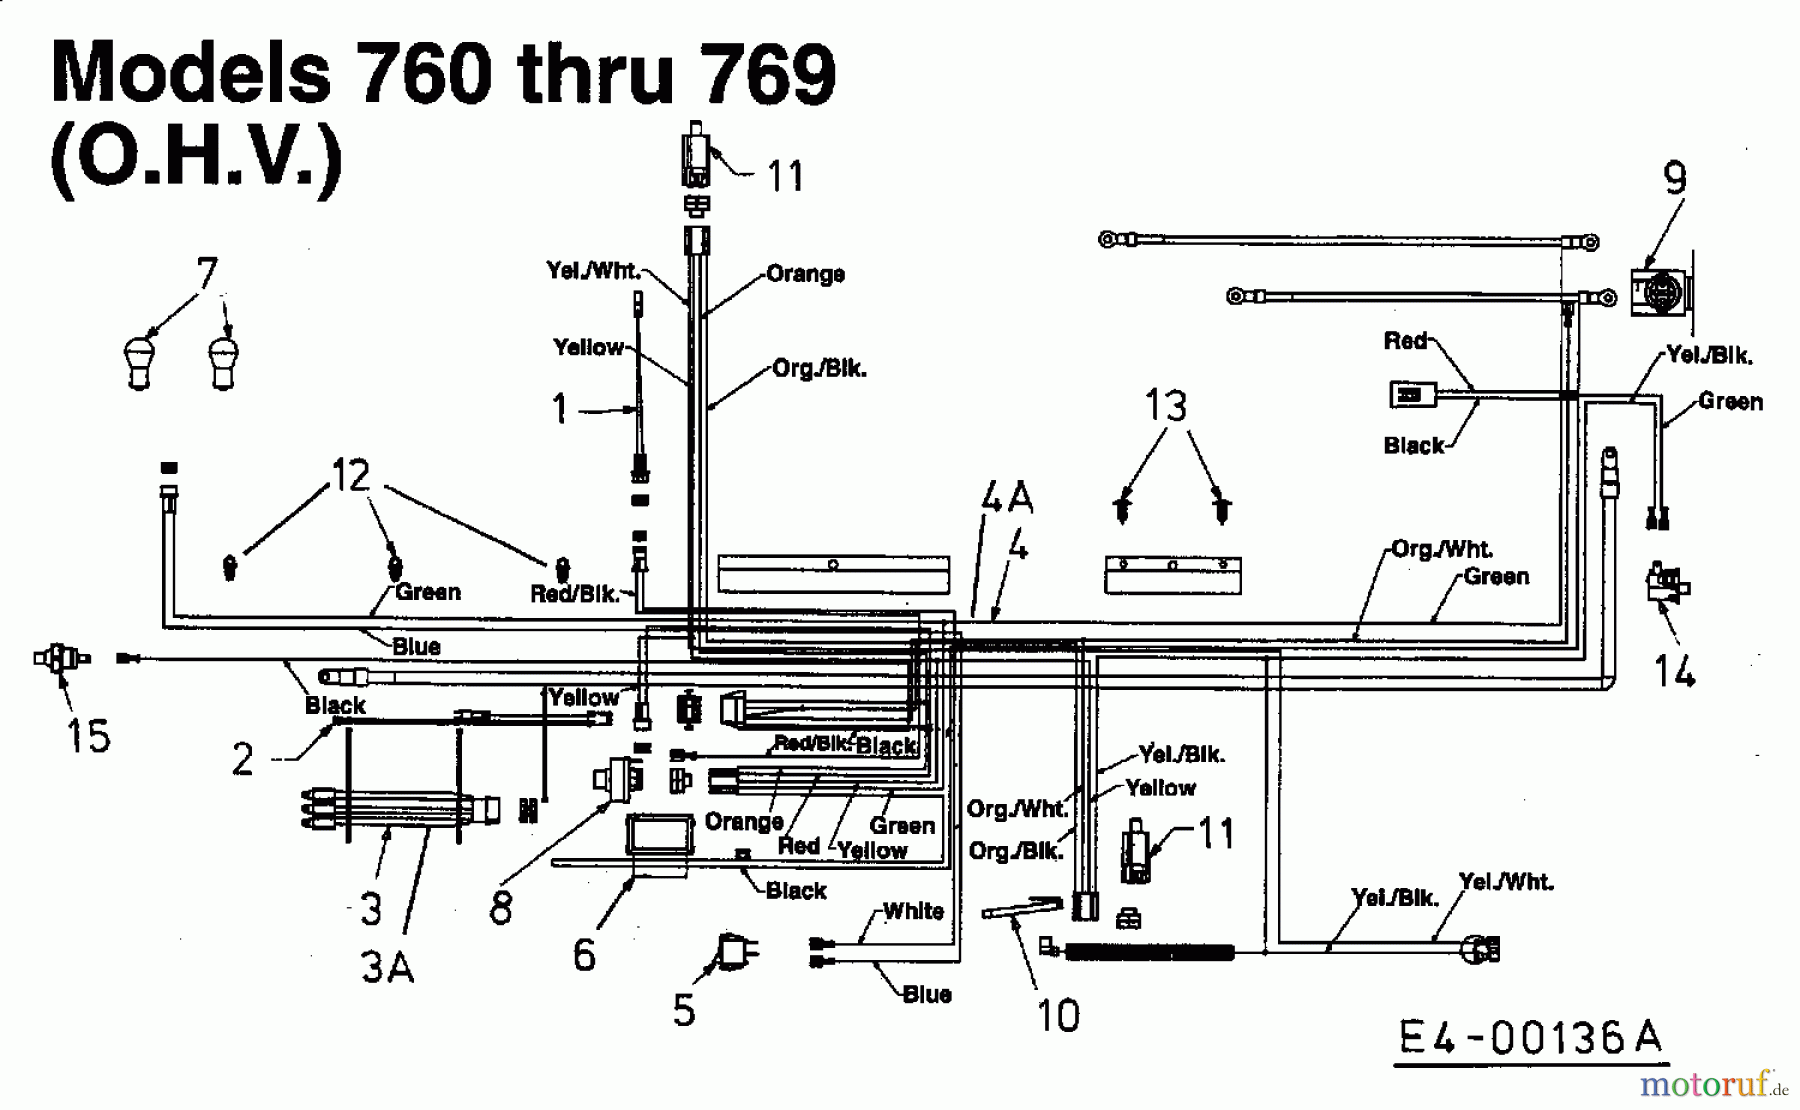  MTD Lawn tractors IB 130 13AA765N606  (1998) Wiring diagram for O.H.V.